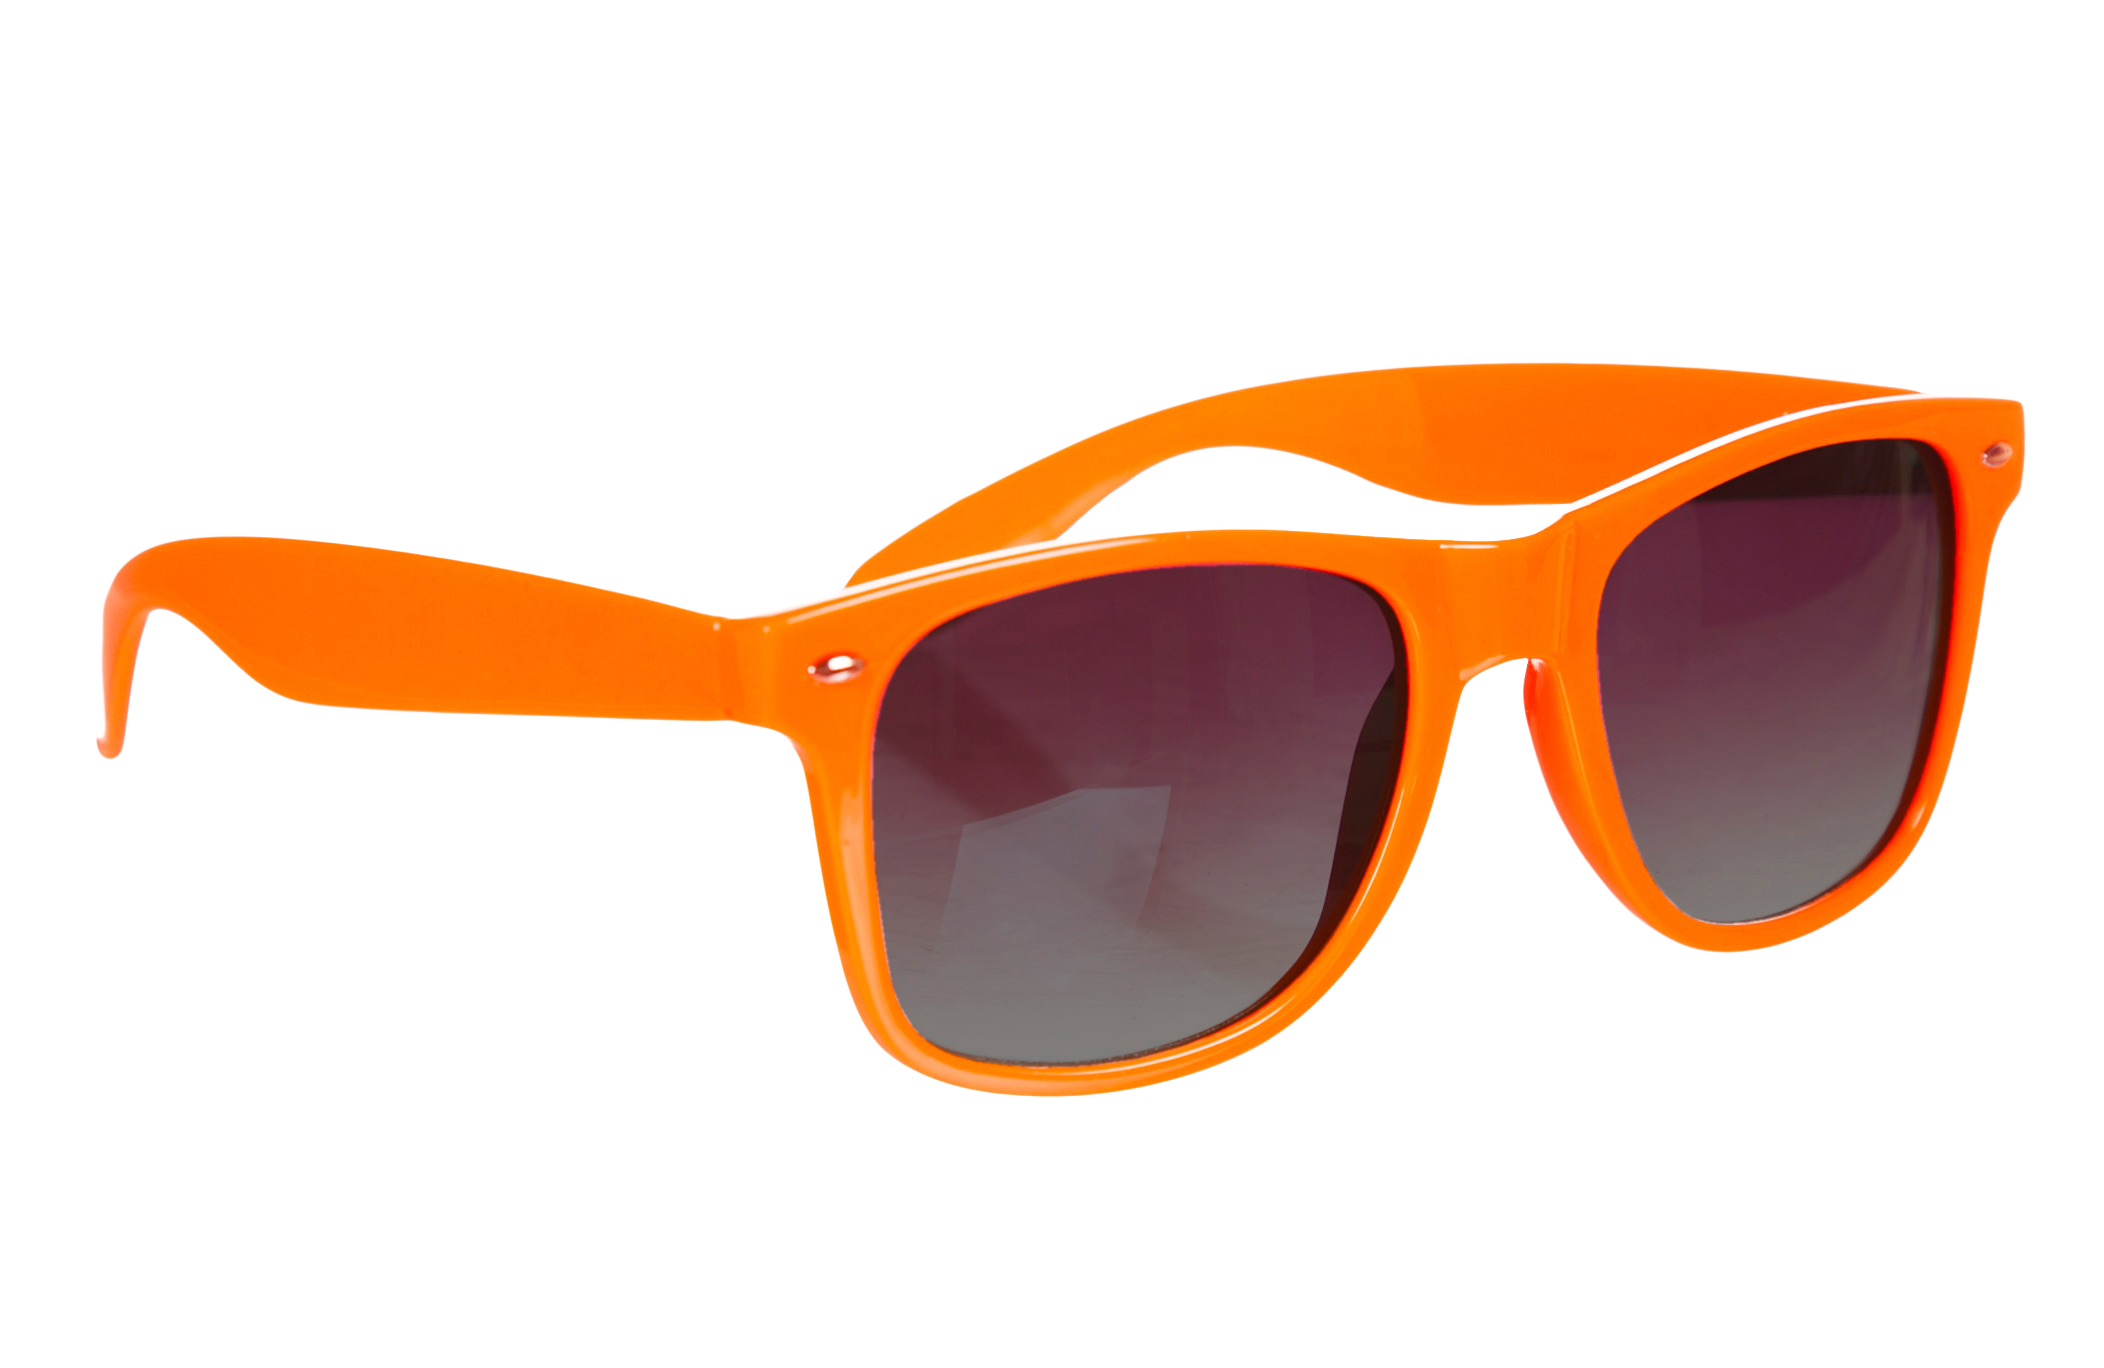 Sunglass Png Transparent Image - Sunglasses, Transparent background PNG HD thumbnail